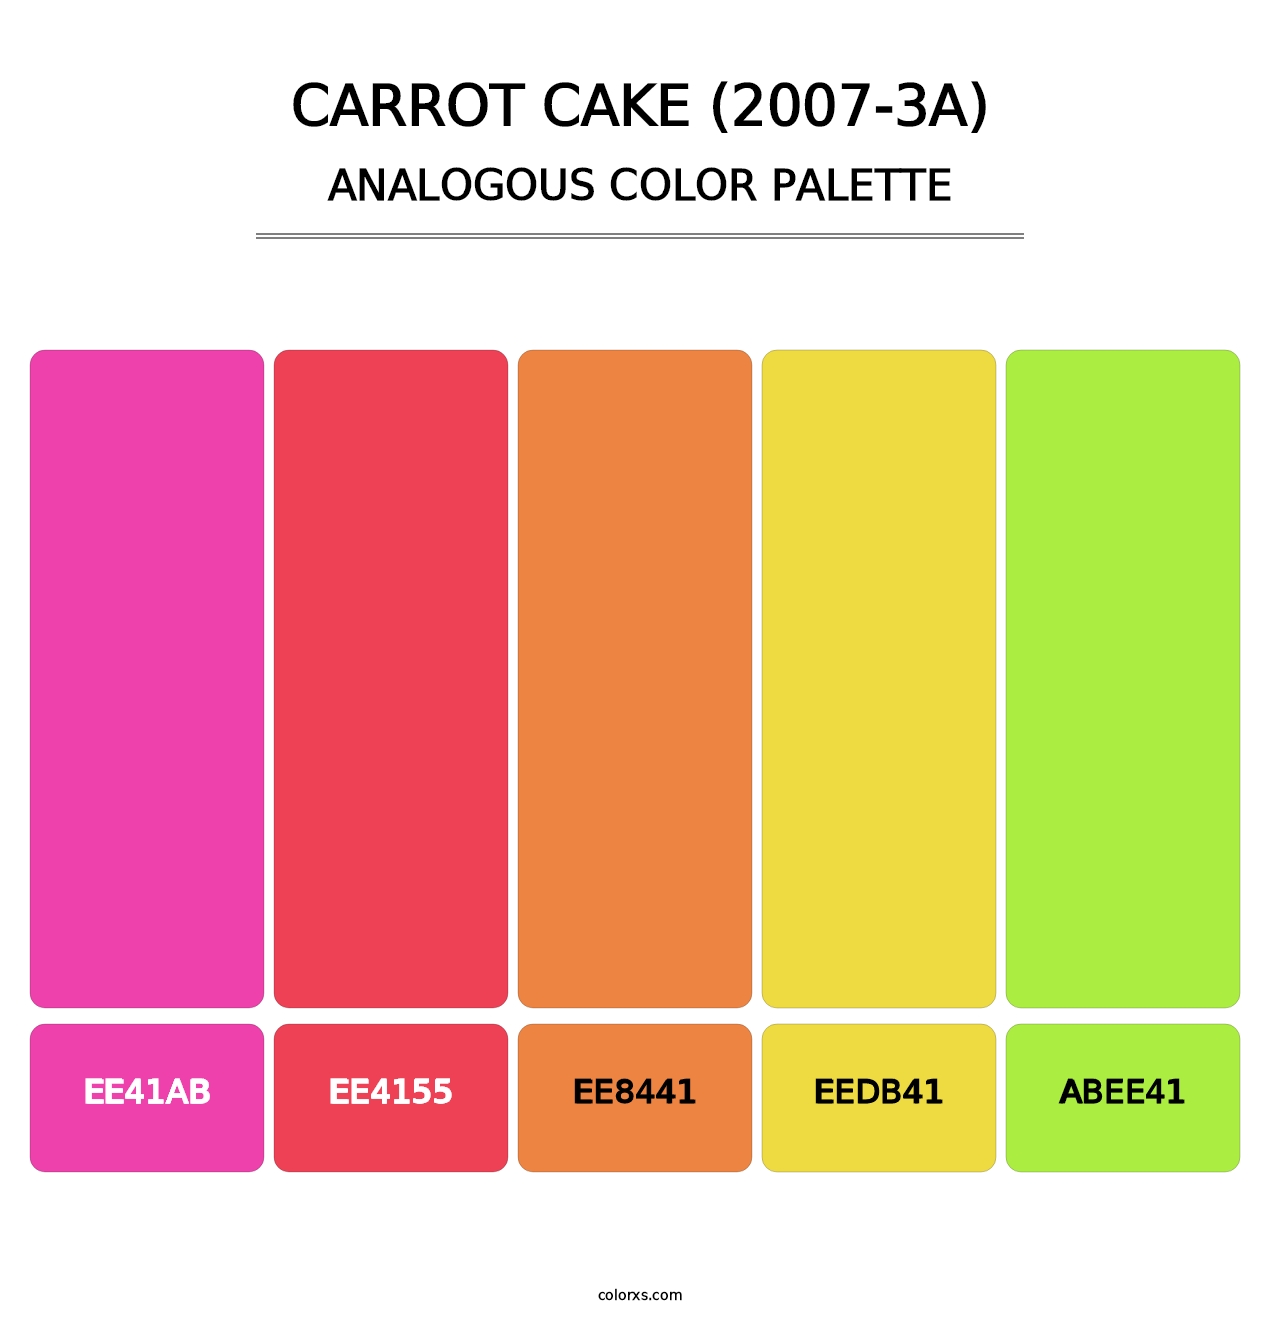 Carrot Cake (2007-3A) - Analogous Color Palette